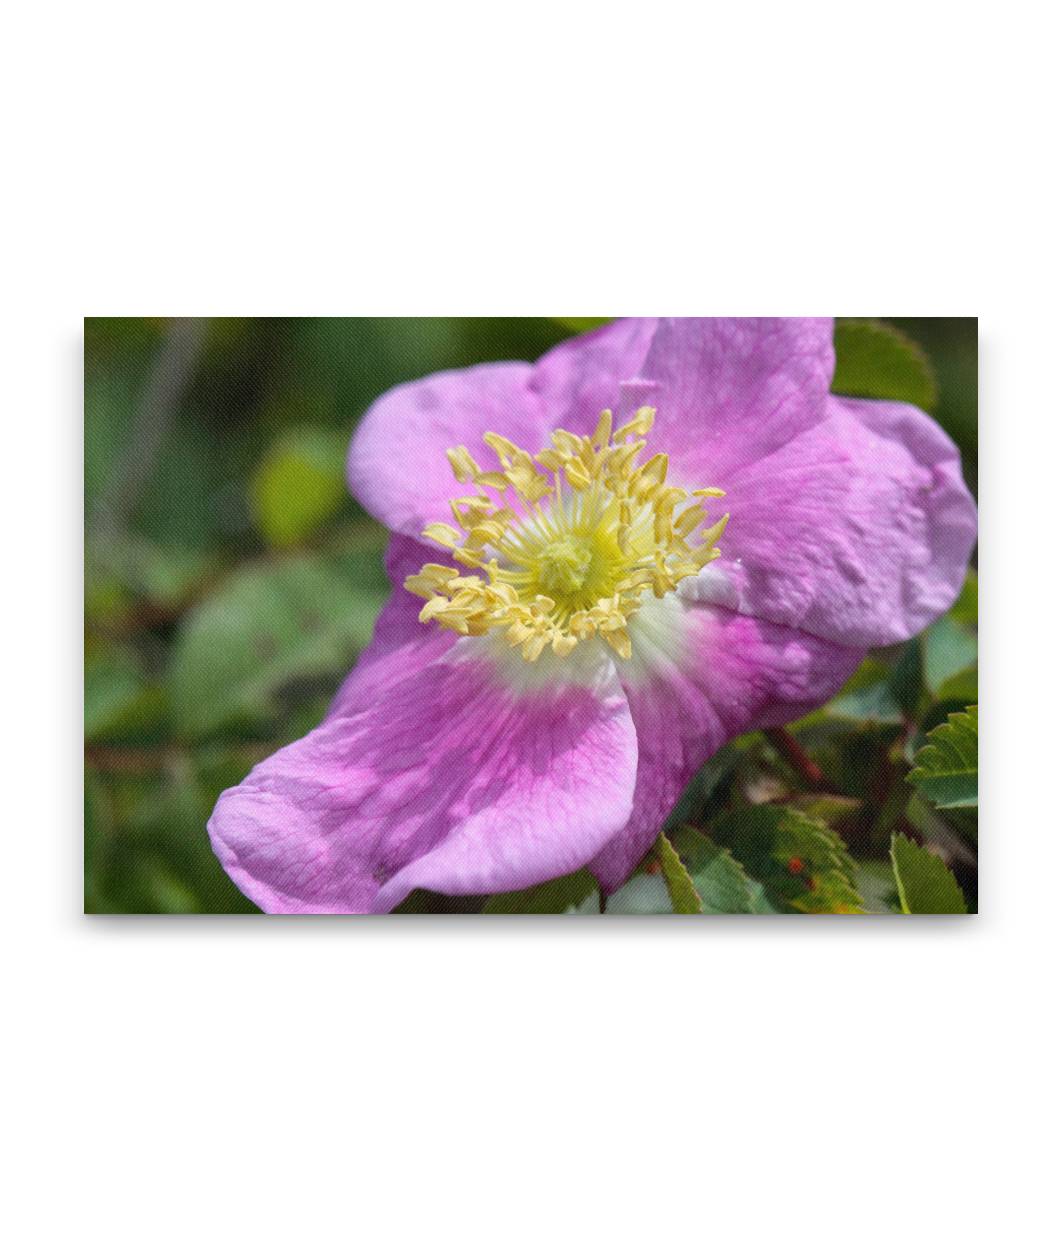 Sweetbriar Rose, William L. Finley National Wildlife Refuge, Oregon, USA